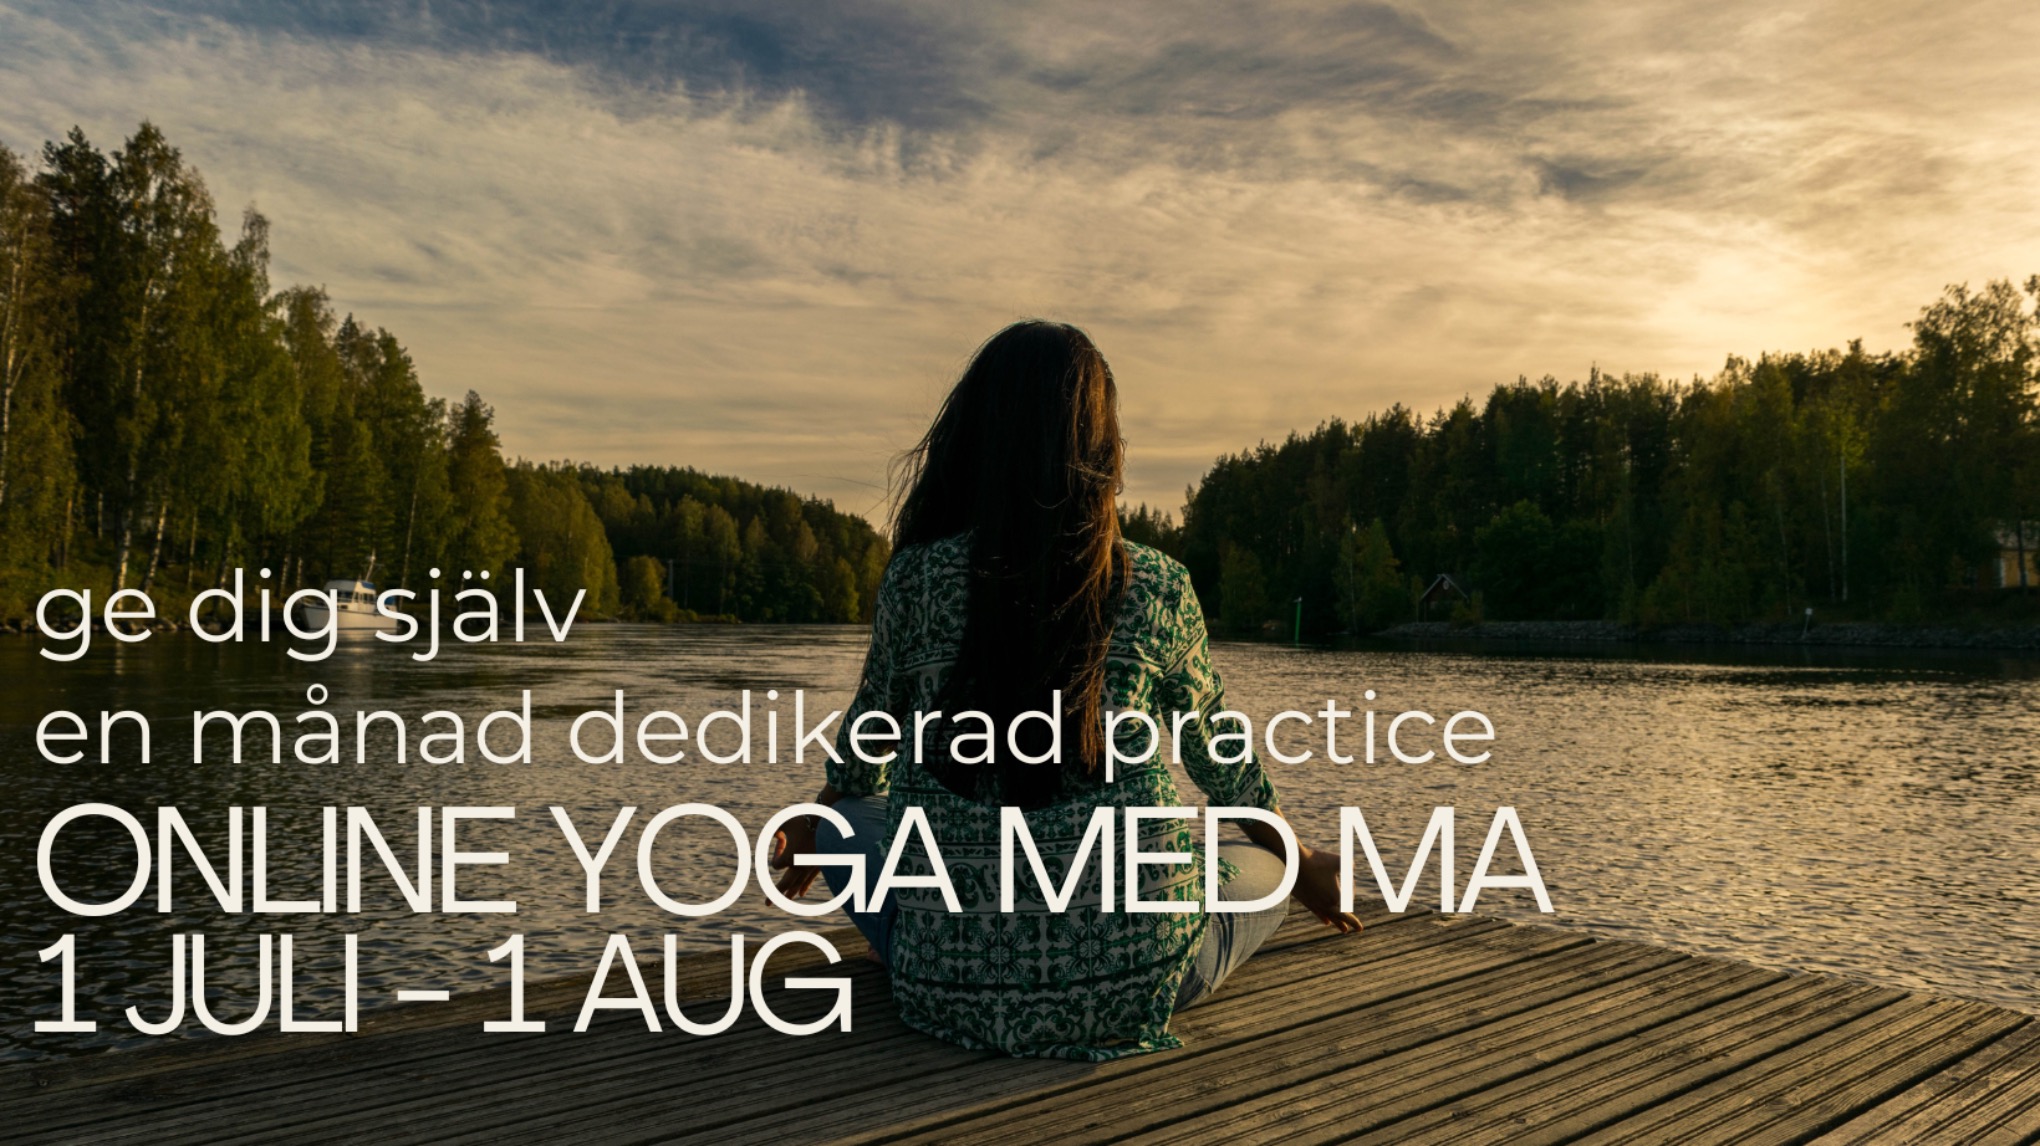 Online yoga 1 juli - 1 aug